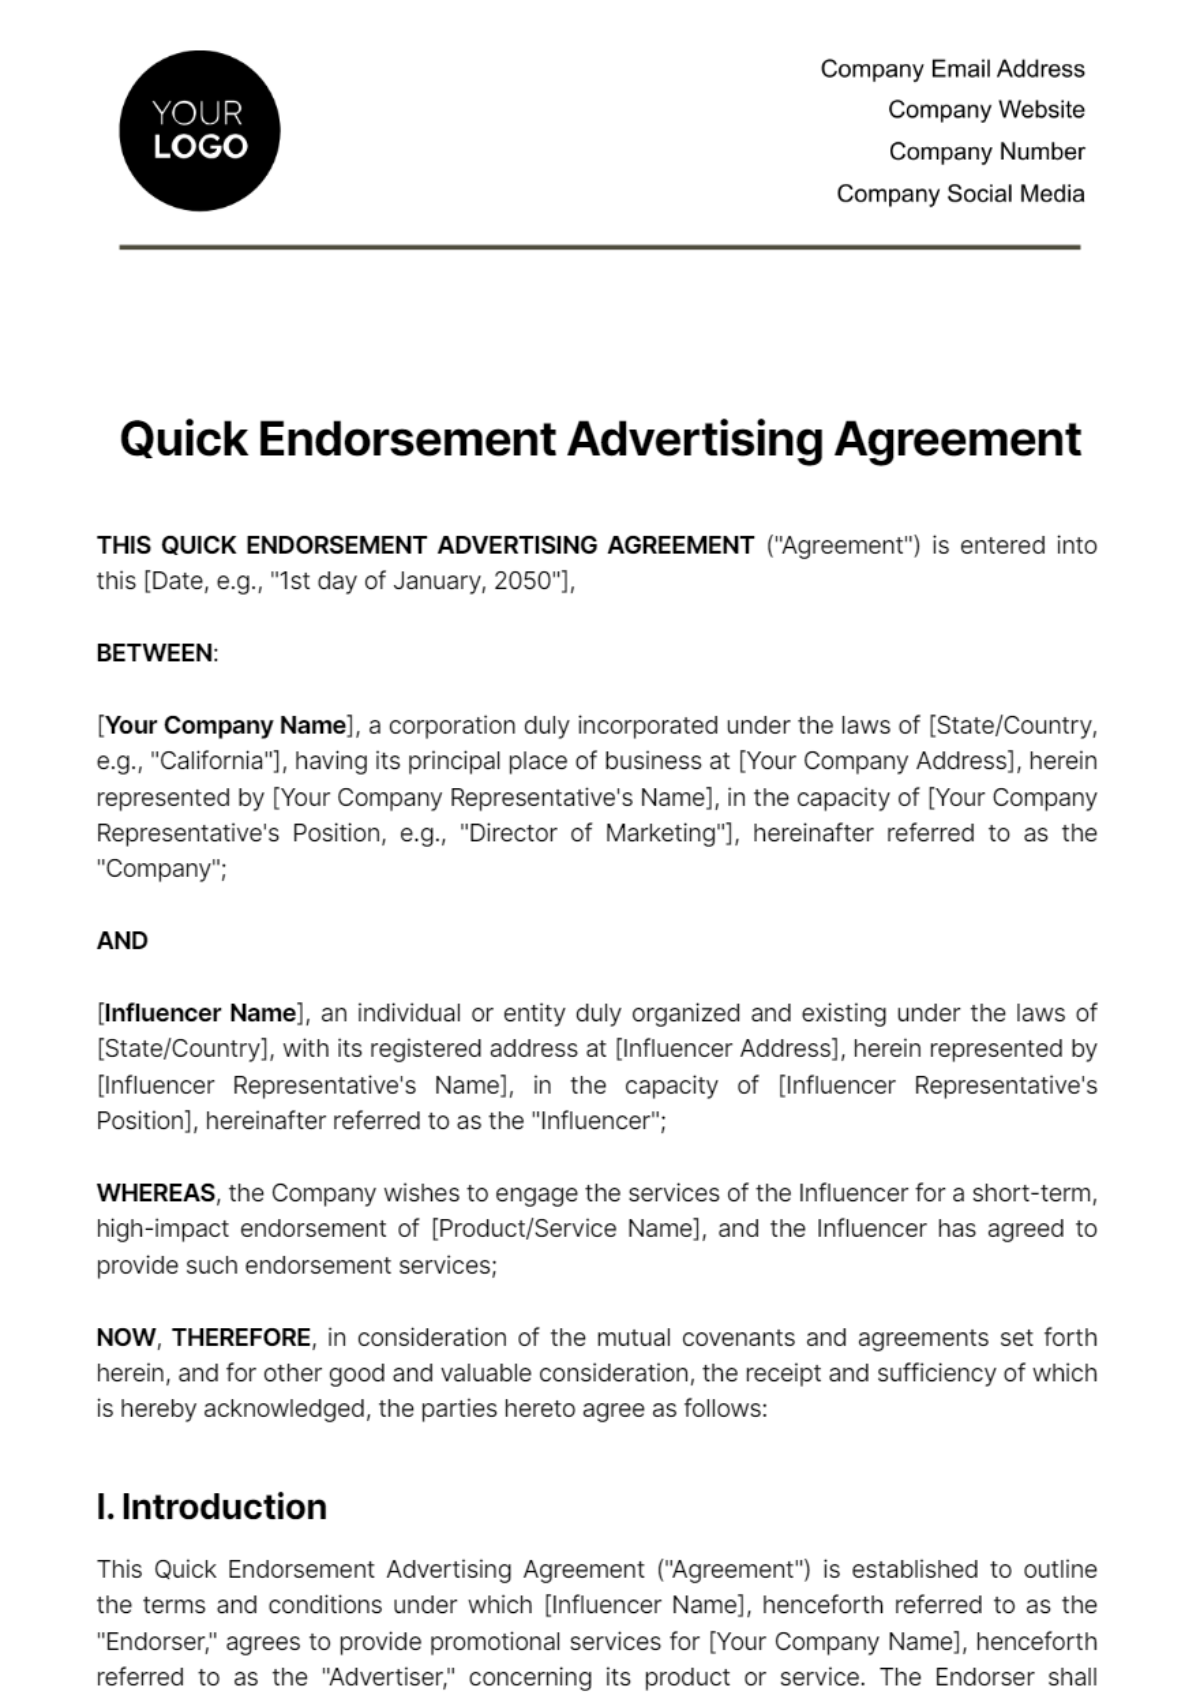 Quick Endorsement Advertising Agreement Template